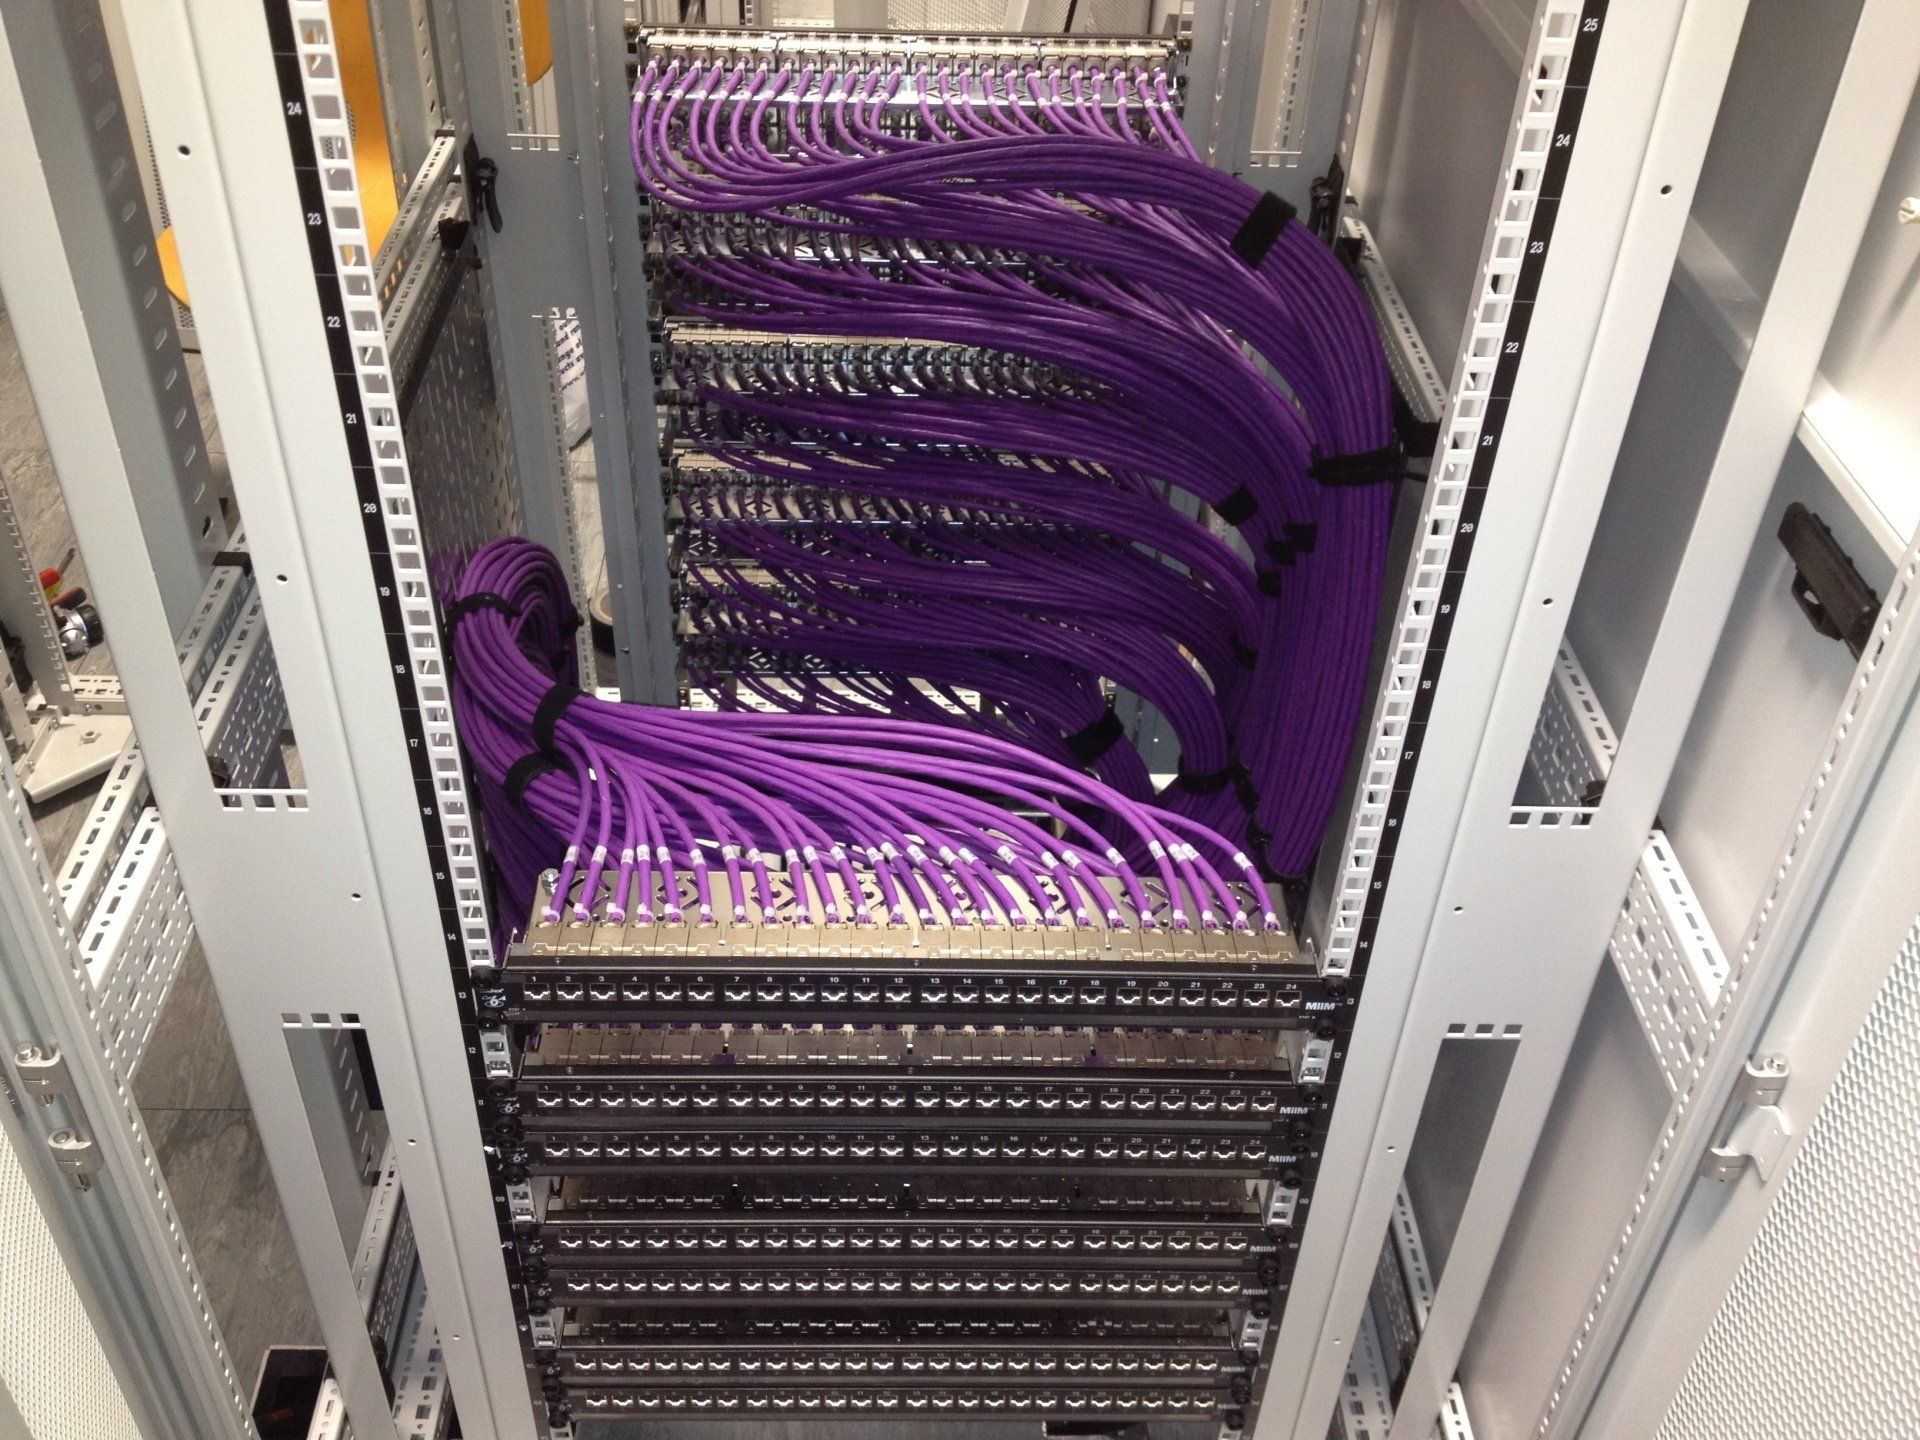 various purple cabling